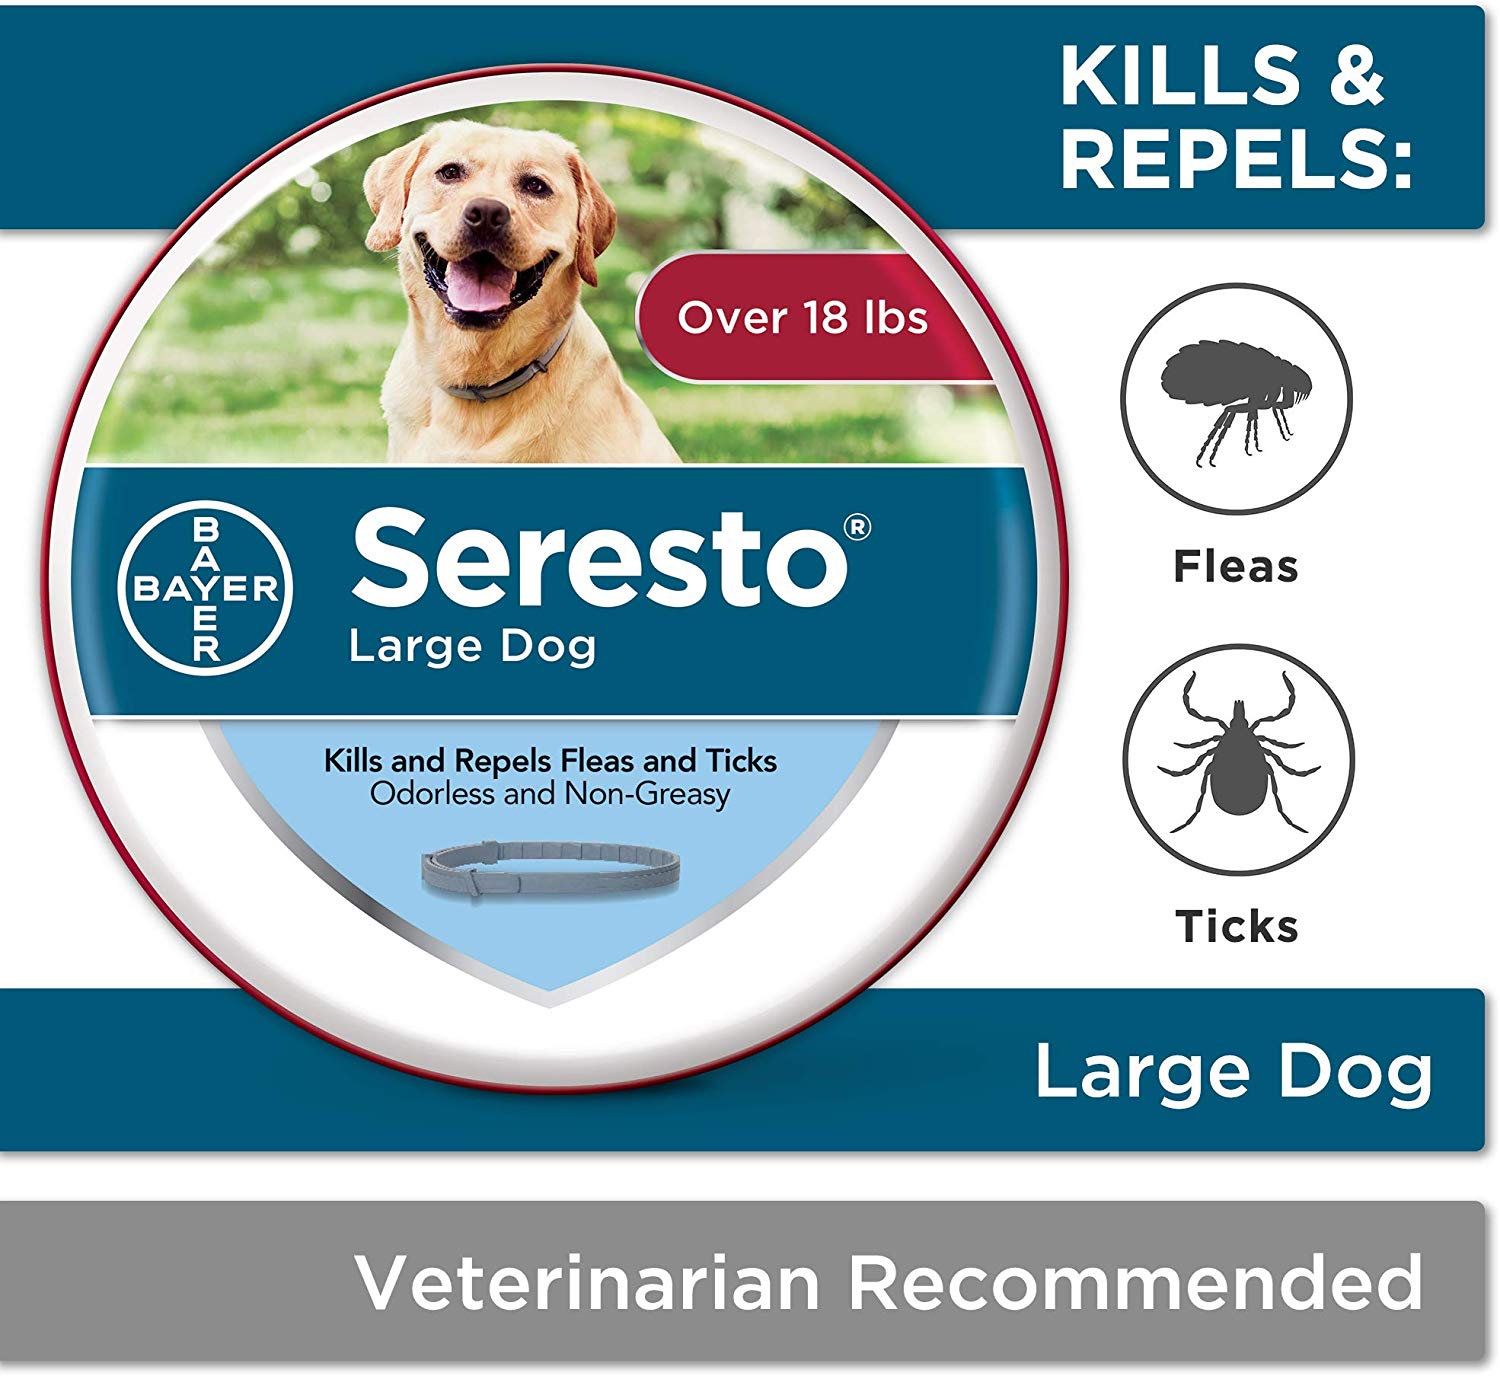 Seresto is a collar that treats fleas for